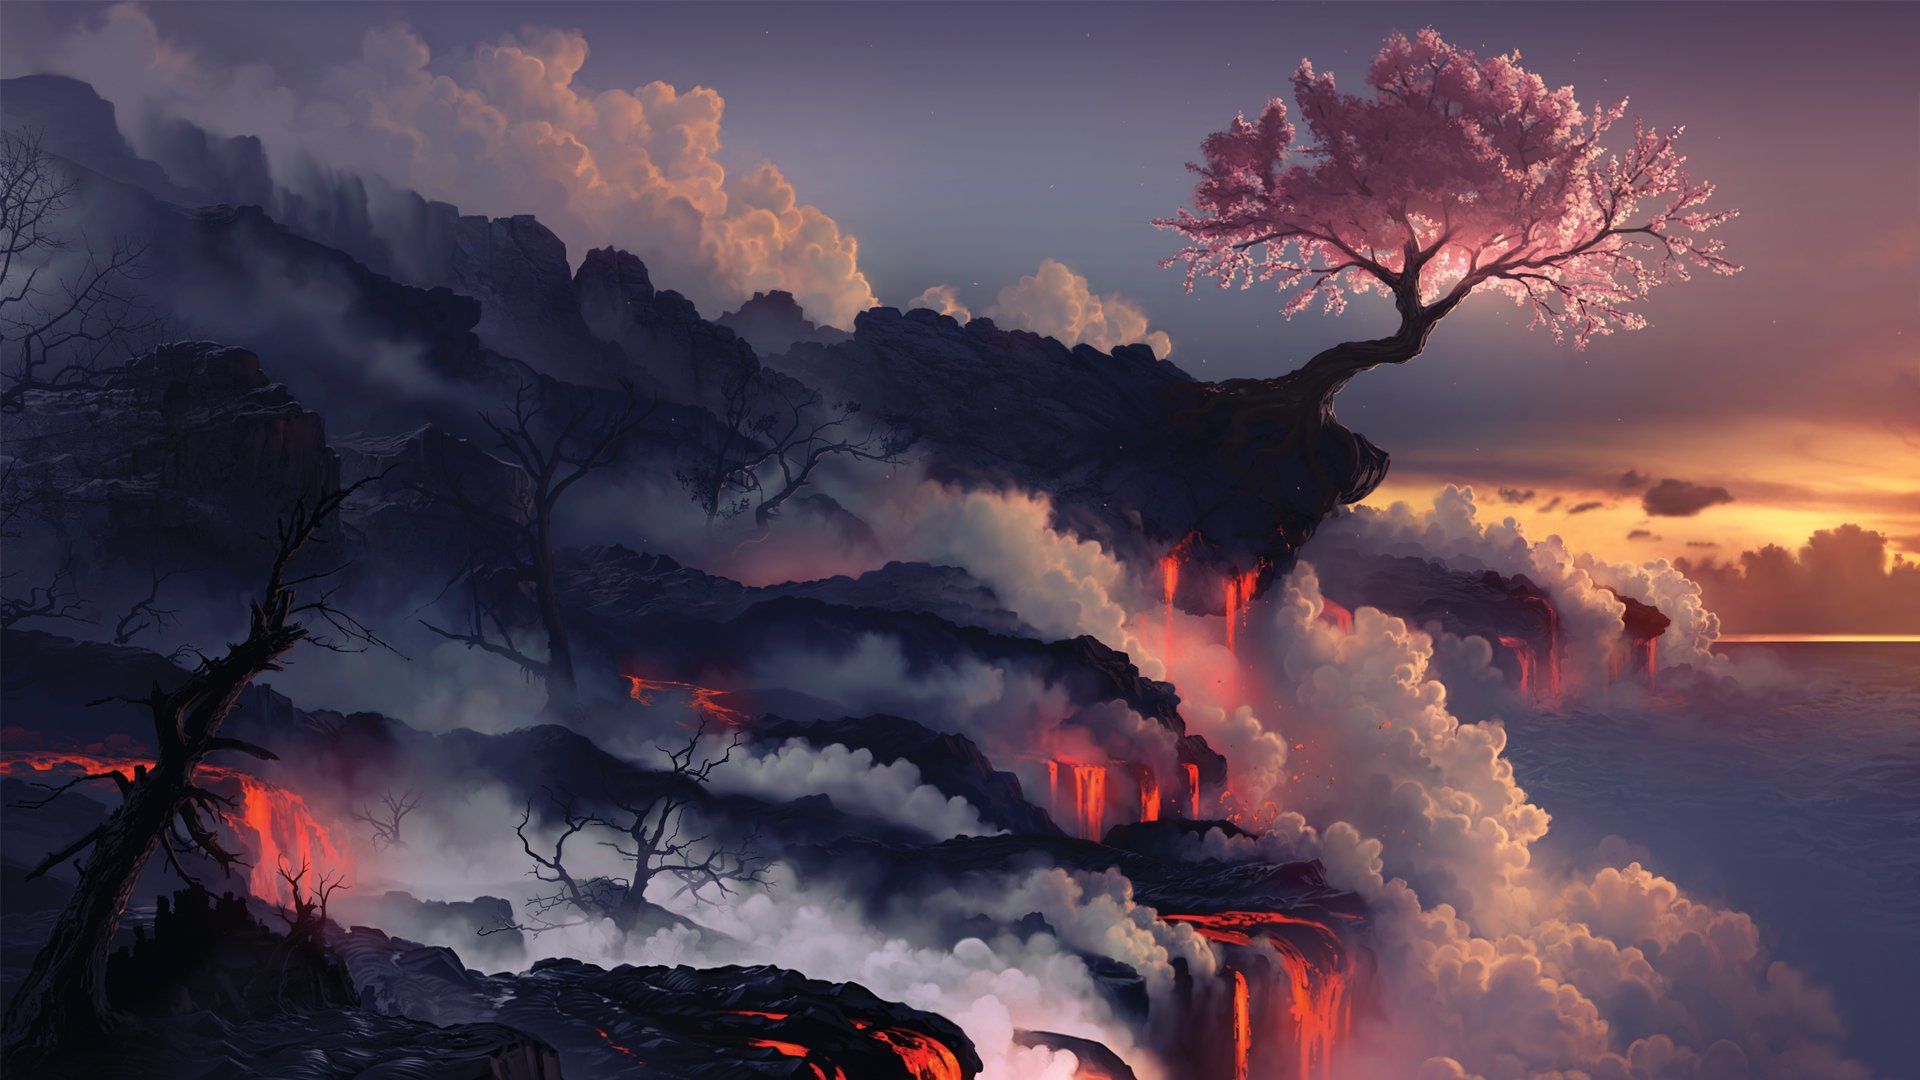 Epic Fantasy Wallpaper Full HD On Wallpaper 1080p HD. Landscape wallpaper, Volcano wallpaper, Fantasy landscape